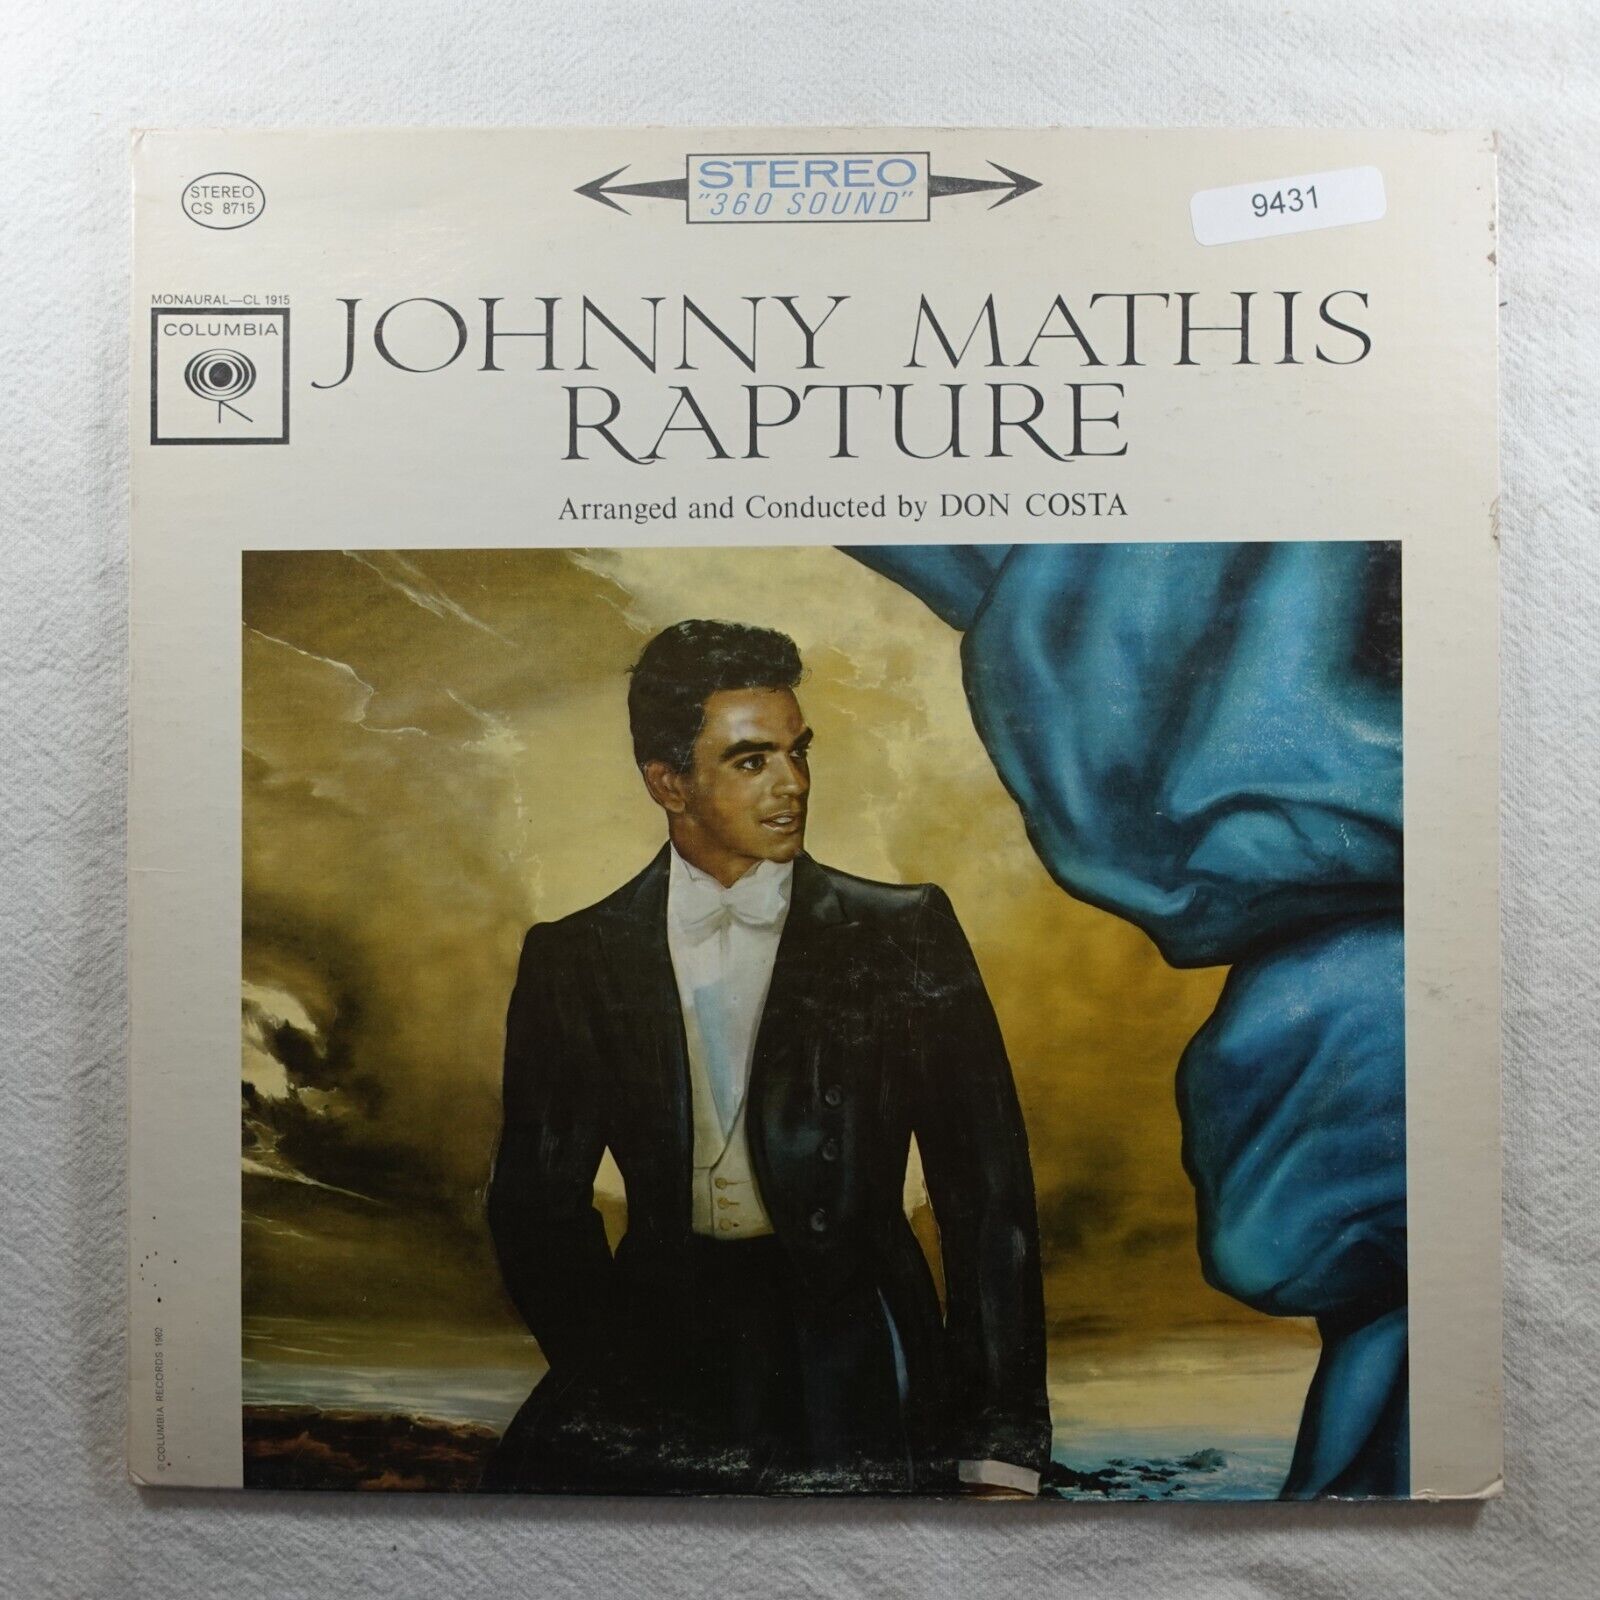 Johnny Mathis Rapture   Record Album Vinyl LP